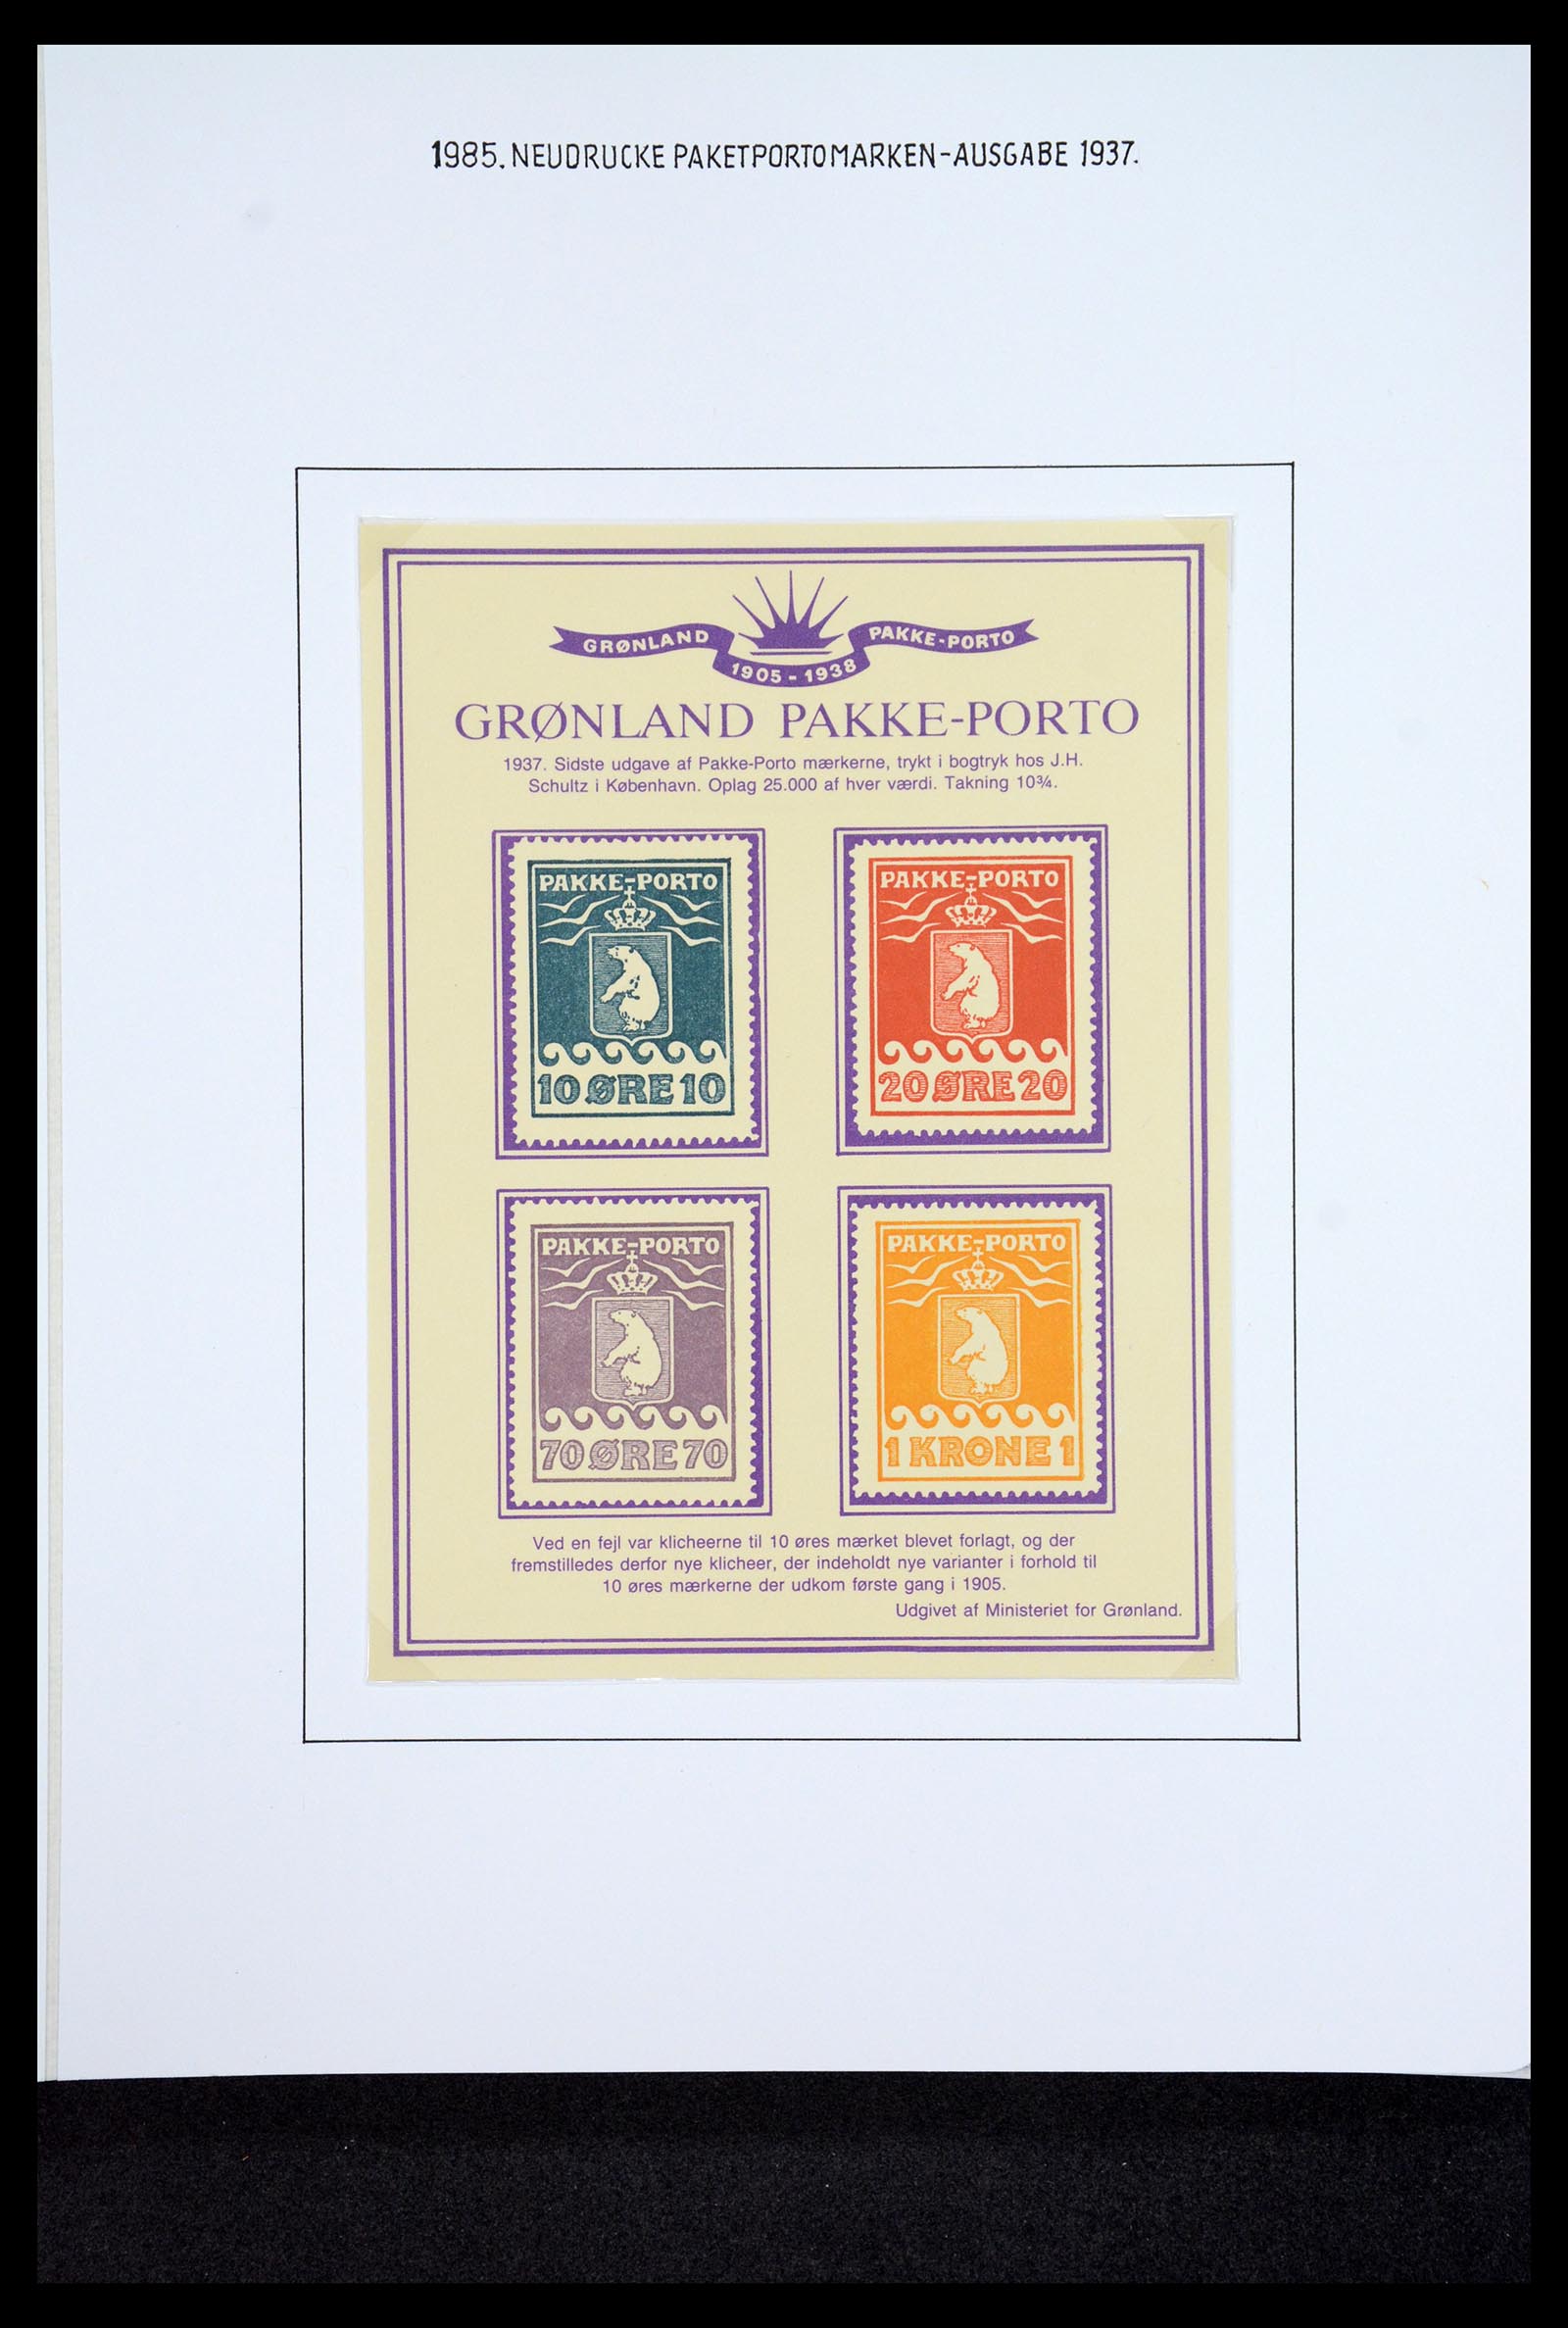 36748 017 - Postzegelverzameling 36748 Groenland pakke-porto 1905-1930.